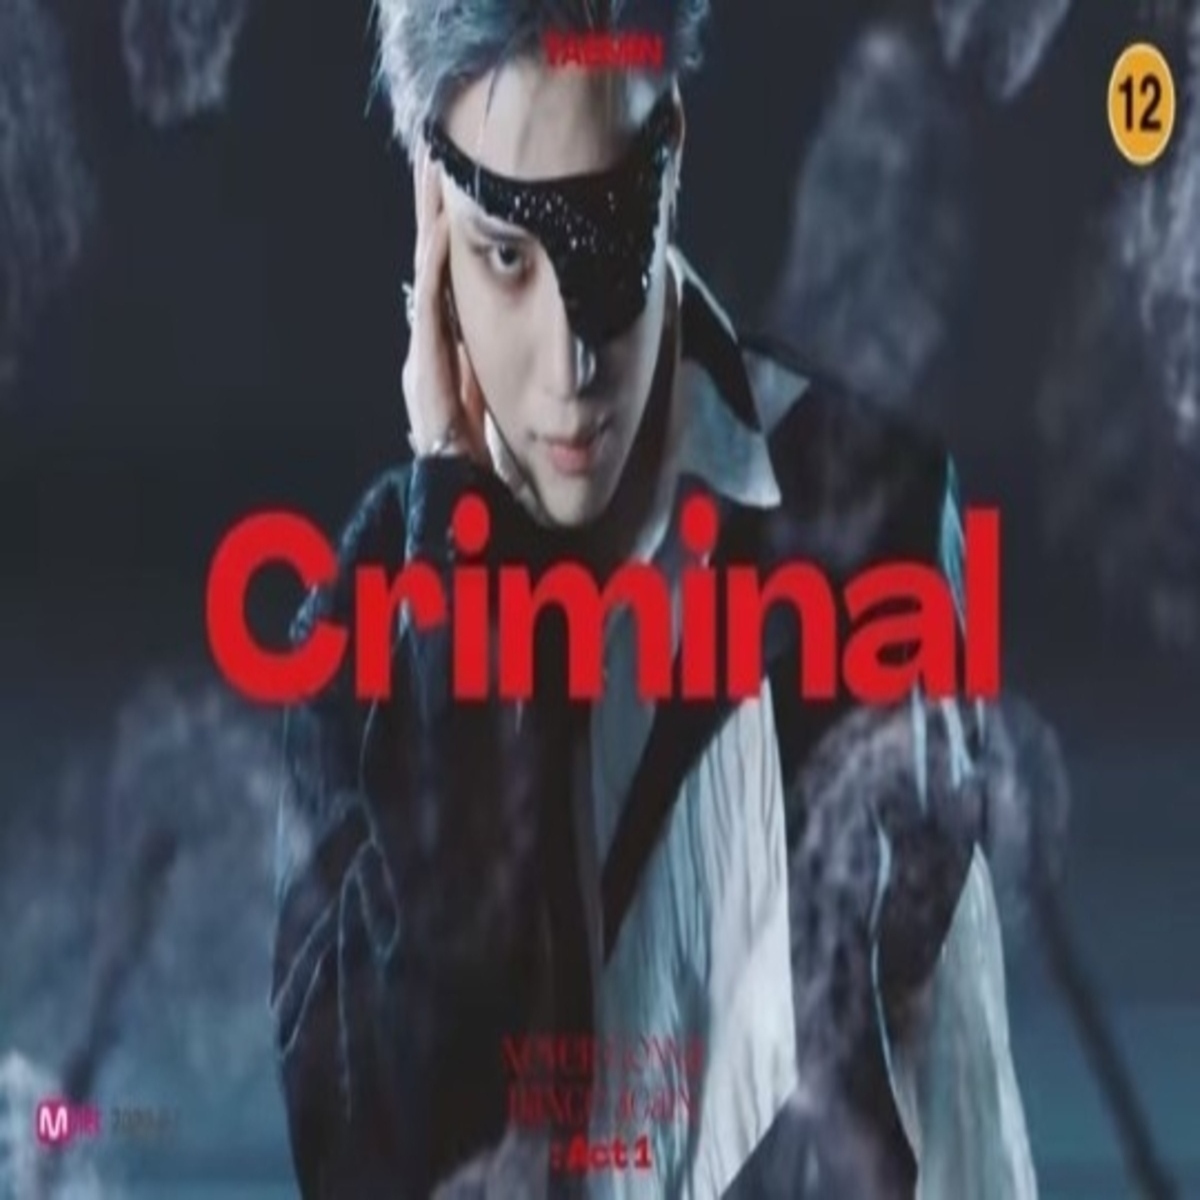 Shinee テミン タイトル曲 Criminal Mv公開 映画のような世界観 魅力溢れるビジュアル Kstyle